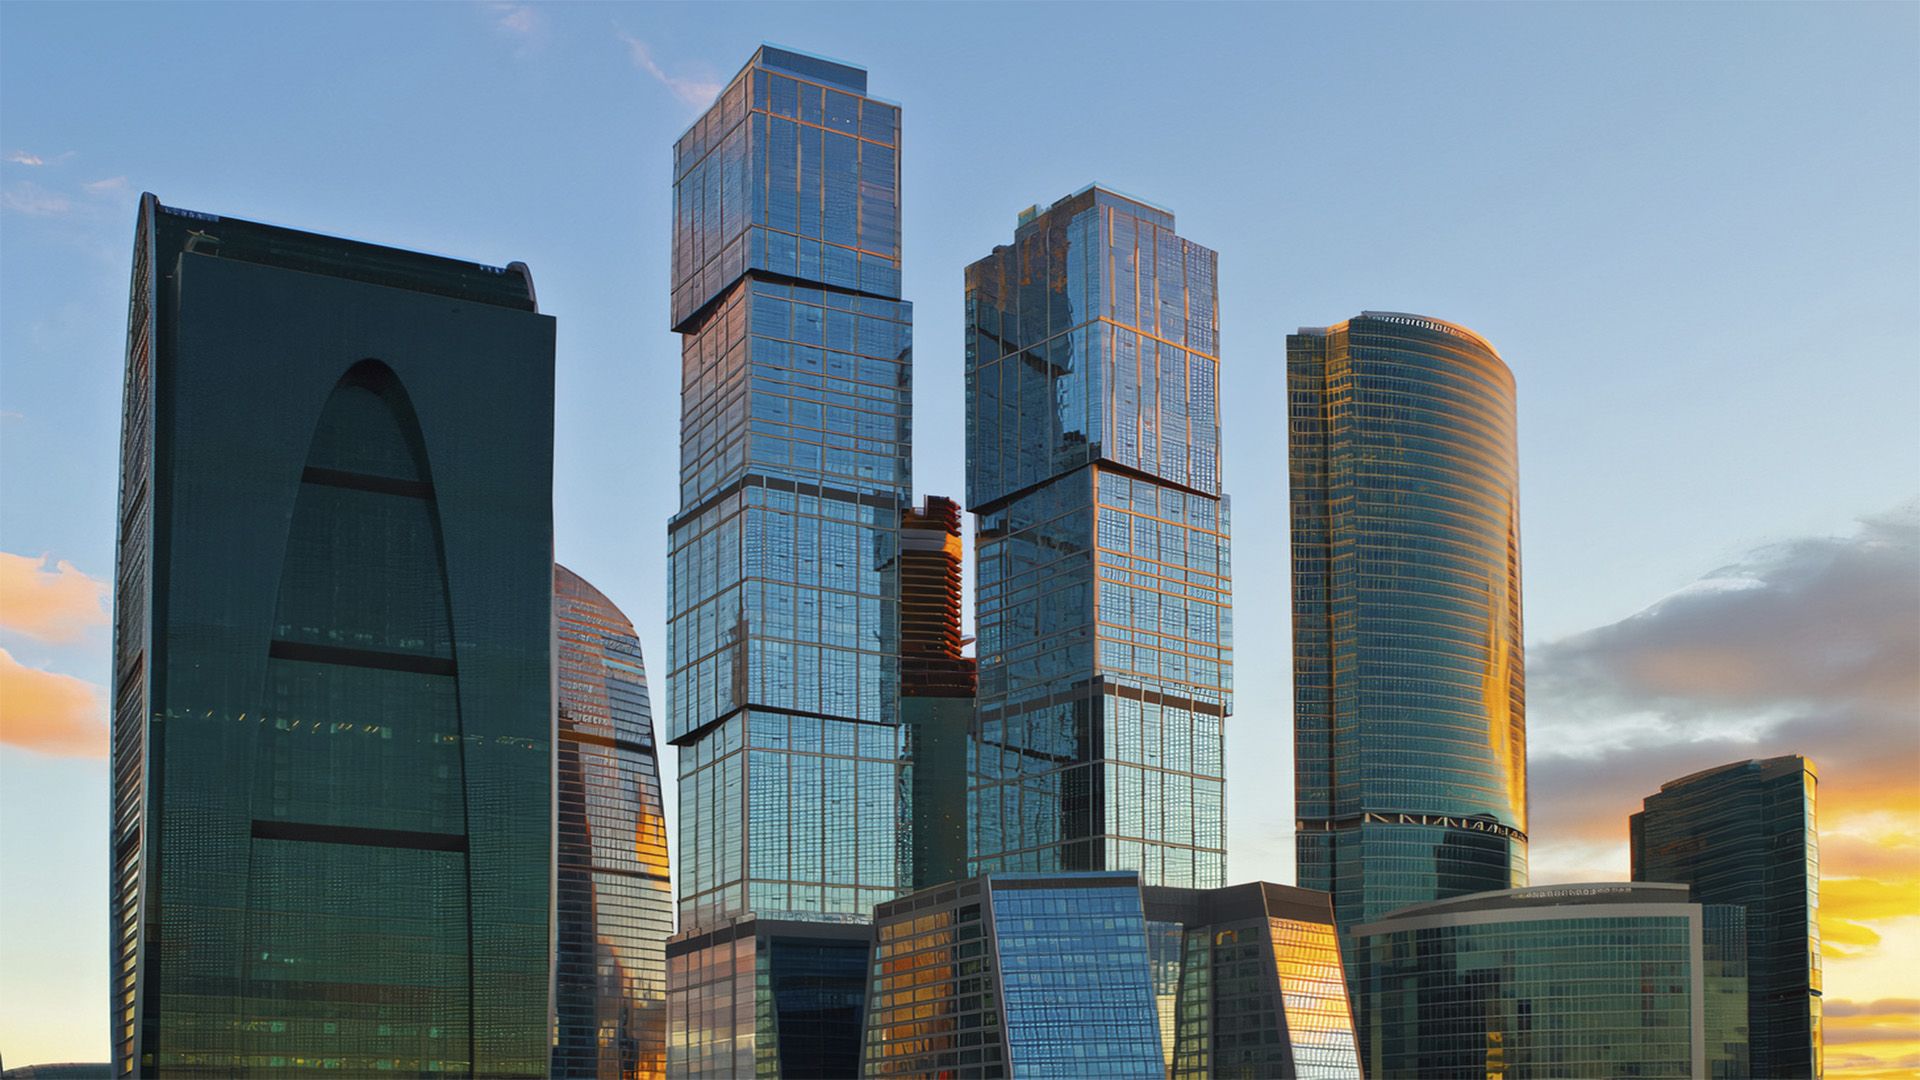 «Город Столиц» — два небоскреба премиум-класса с жилыми апартаментами в комплексе «Москва-Сити».